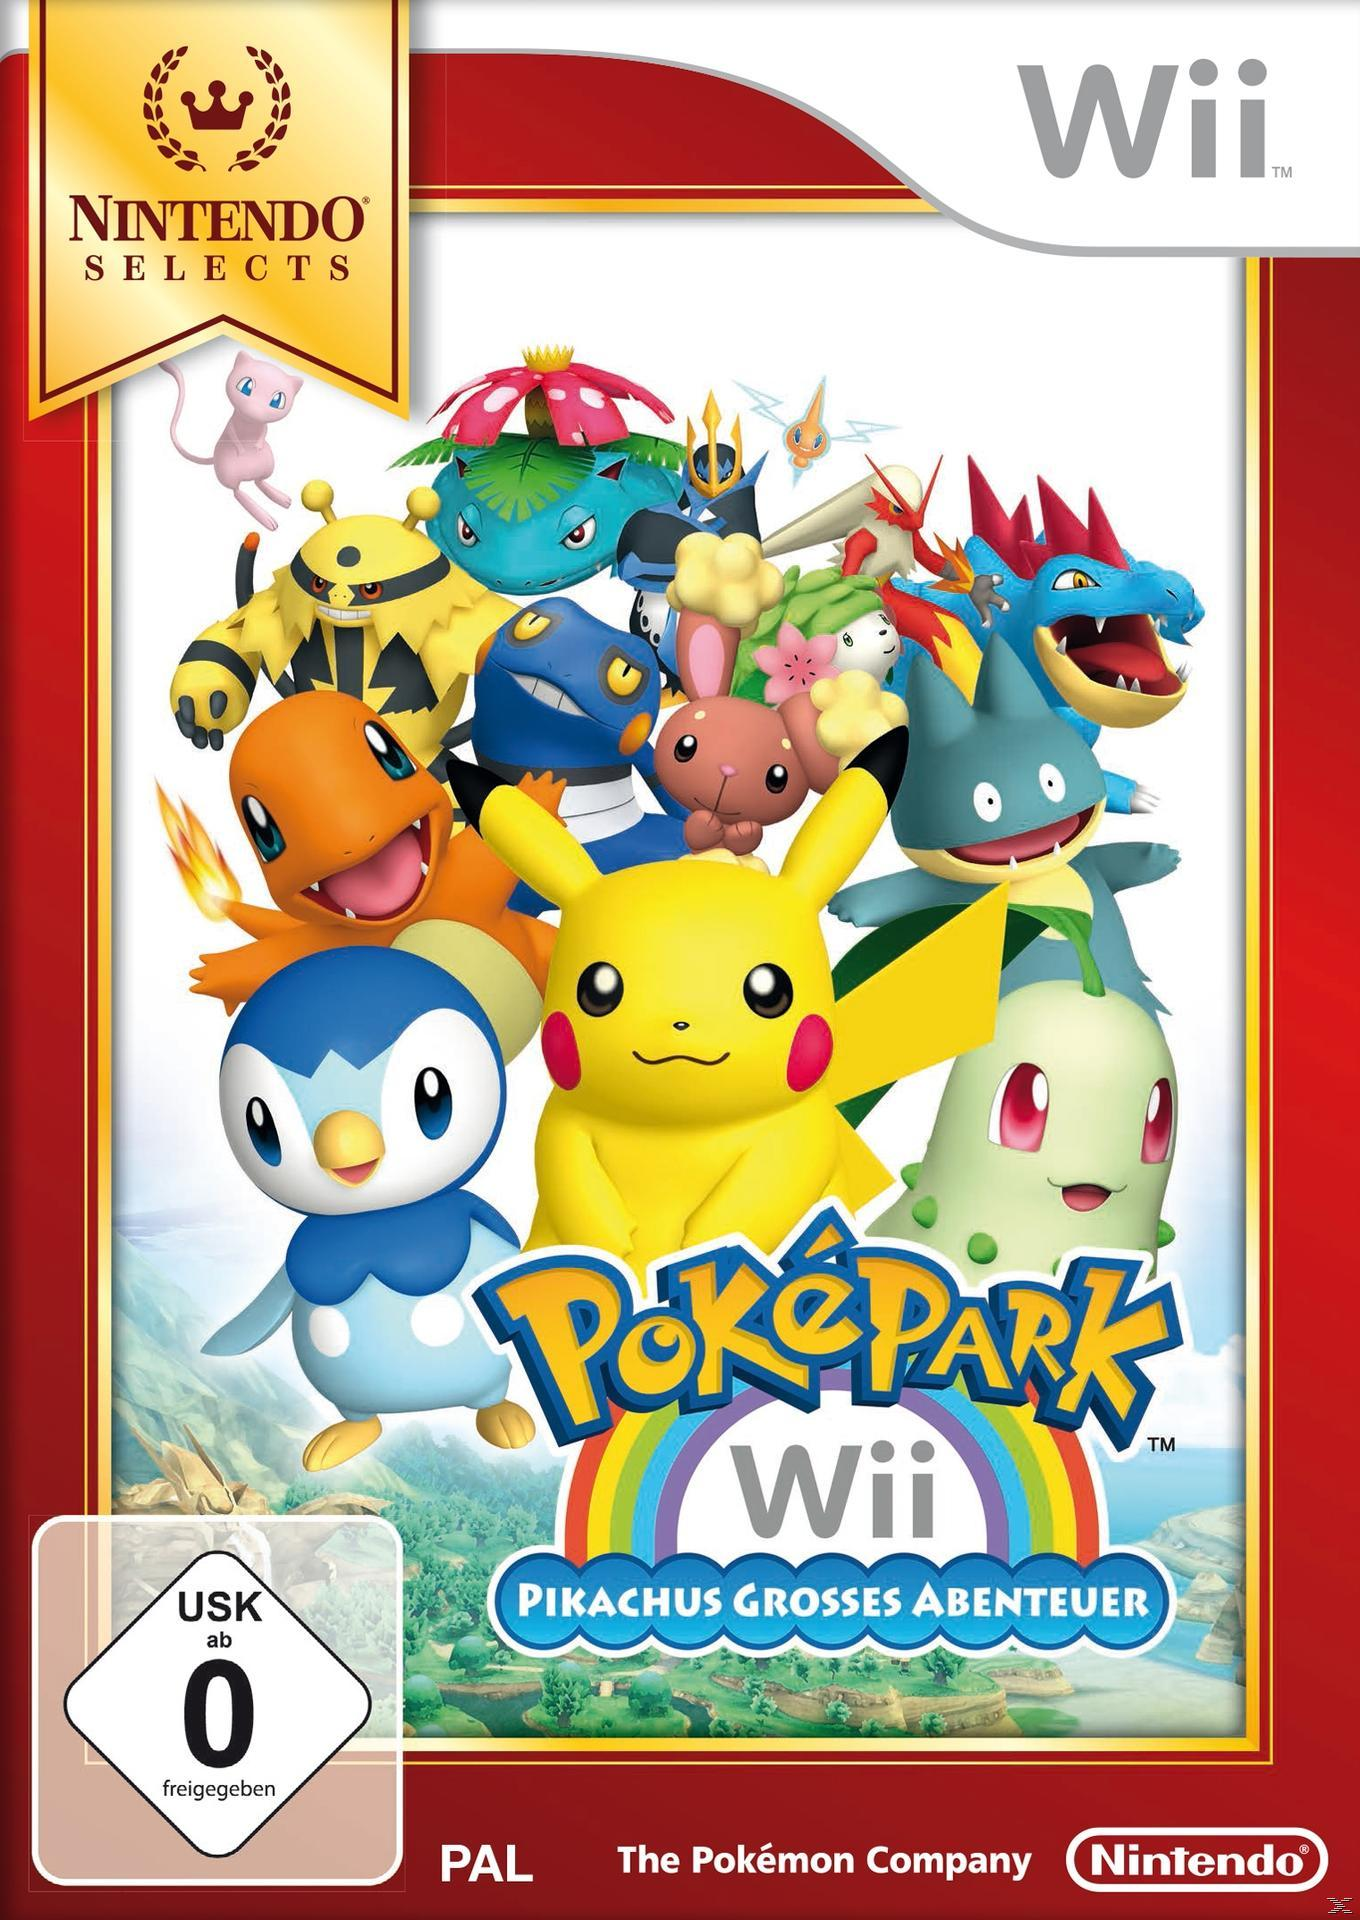 Wii] Selects) Abenteuer (Nintendo großes - Wii: Pikachus PokéPark [Nintendo